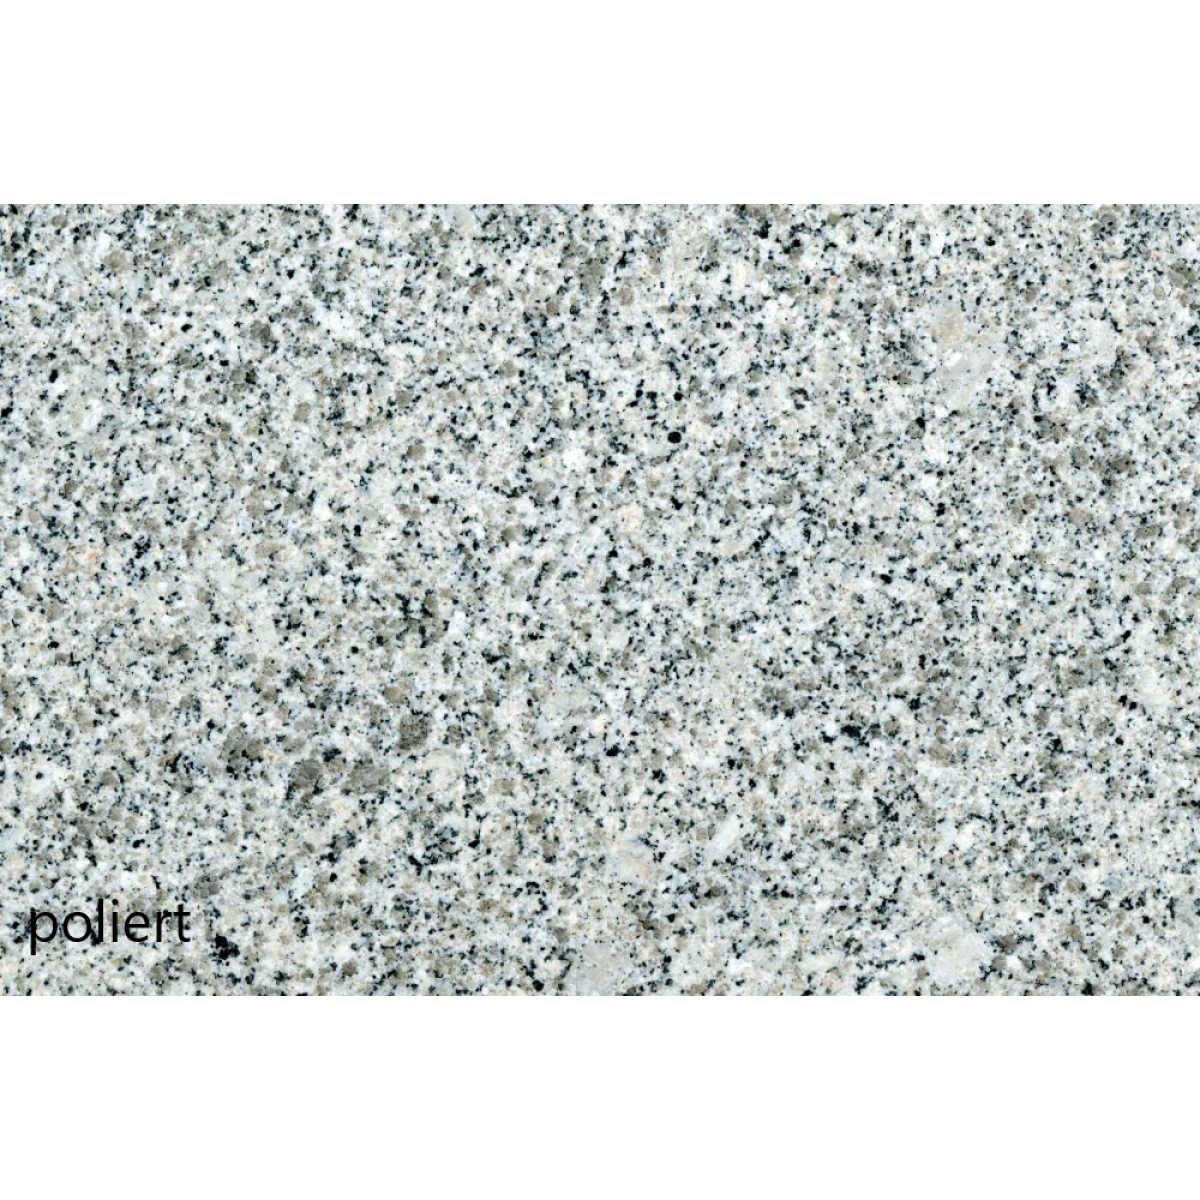 Blanco Iberico poliert - Granit